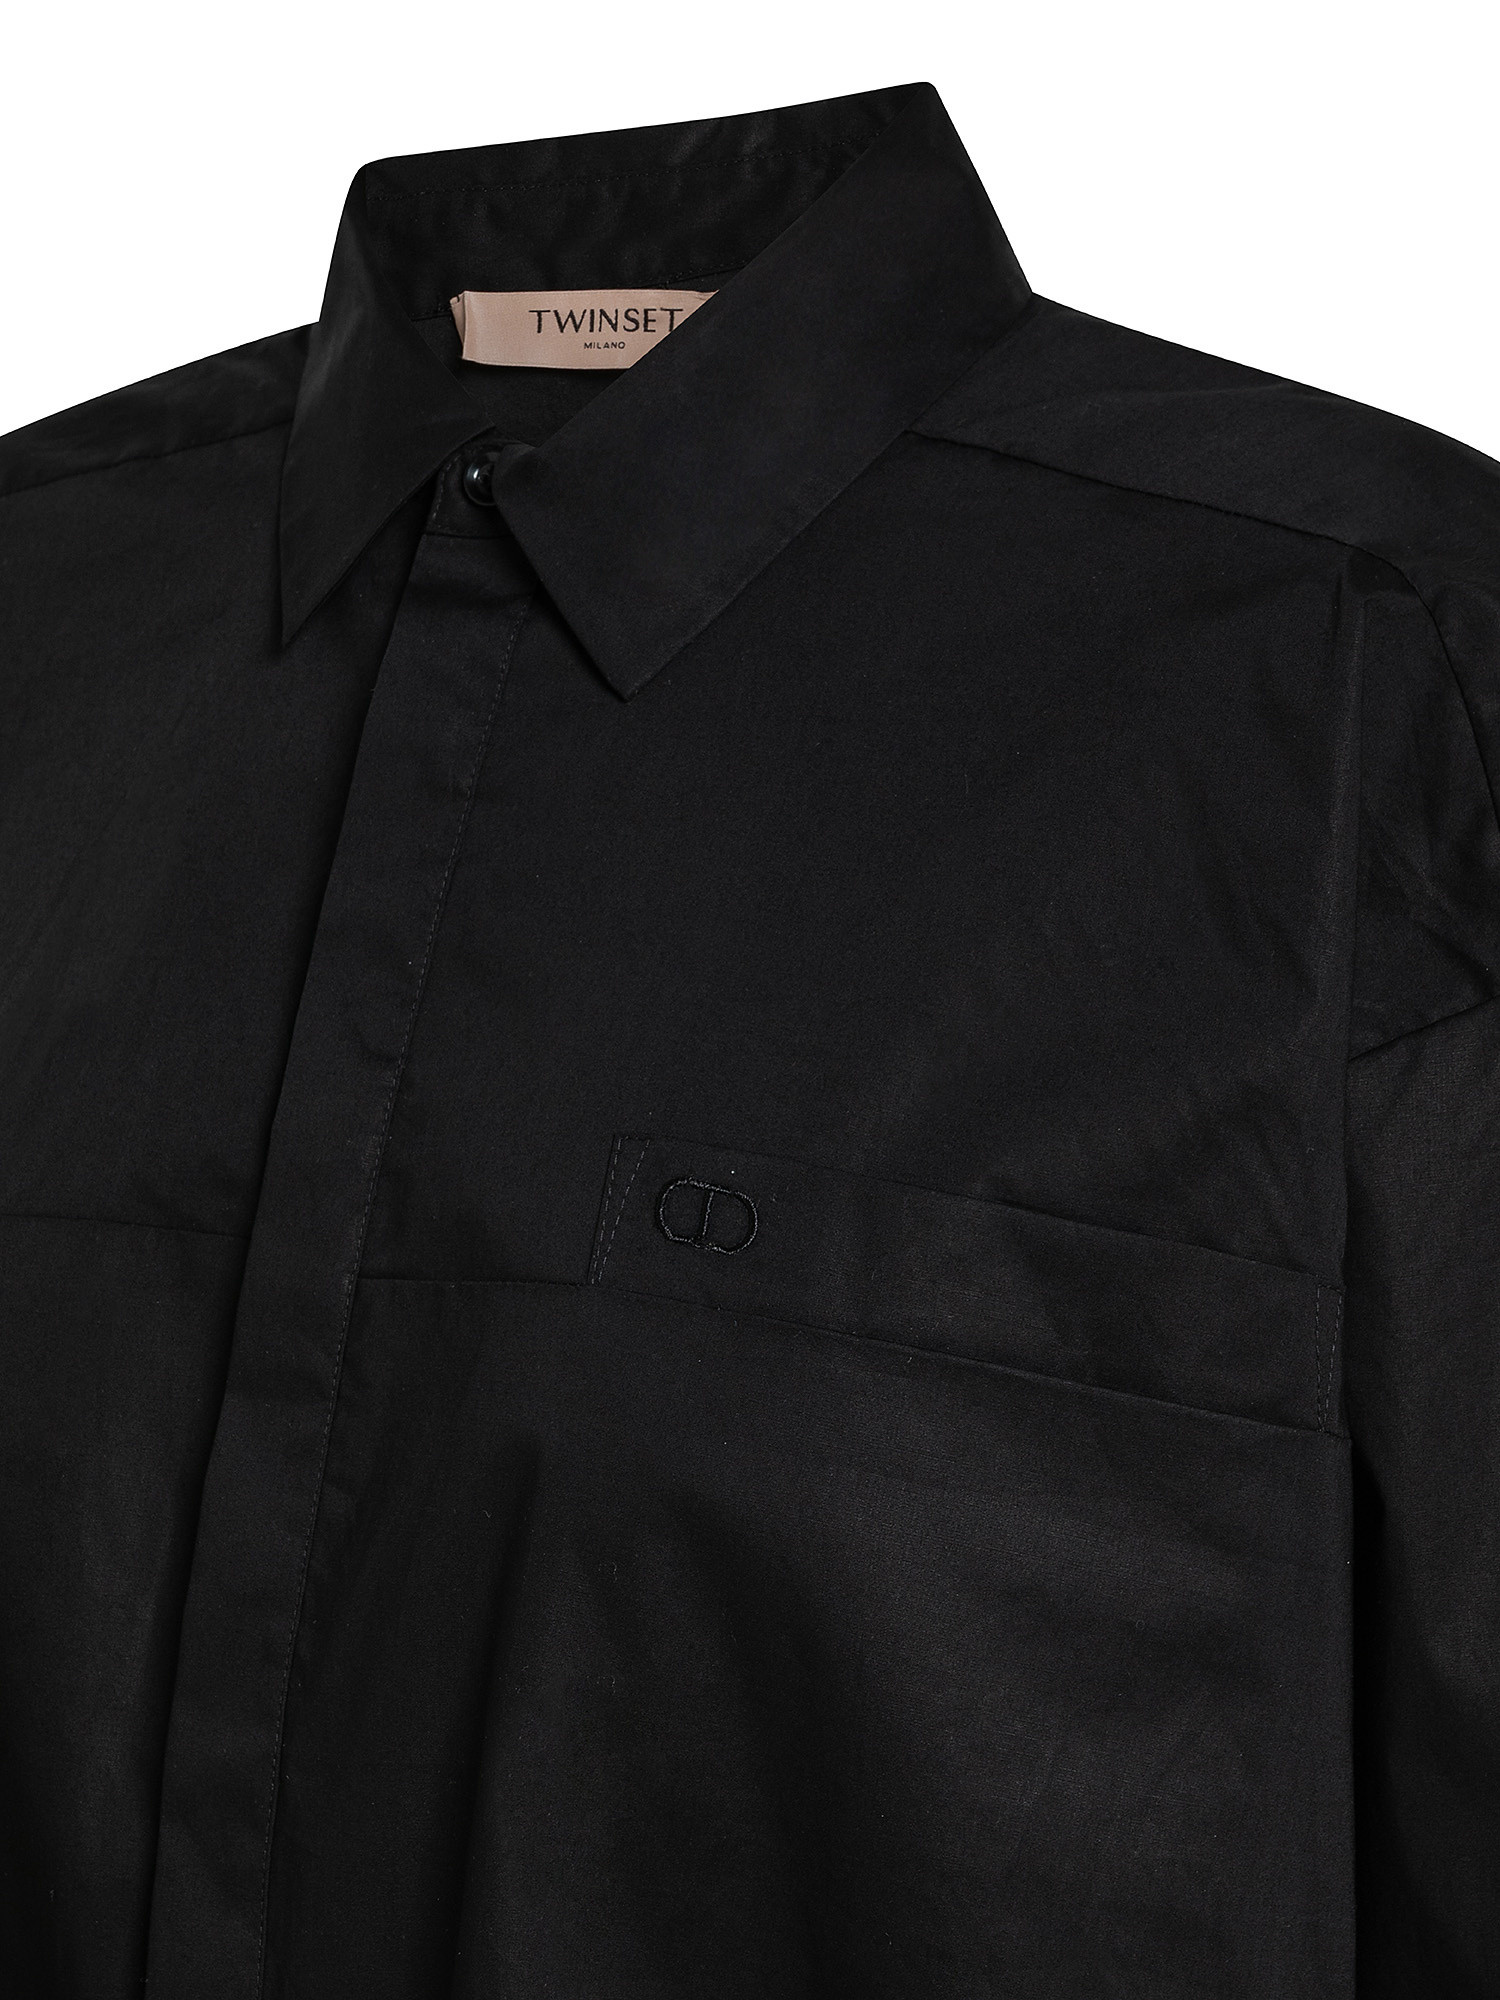 Shirt, Black, large image number 2